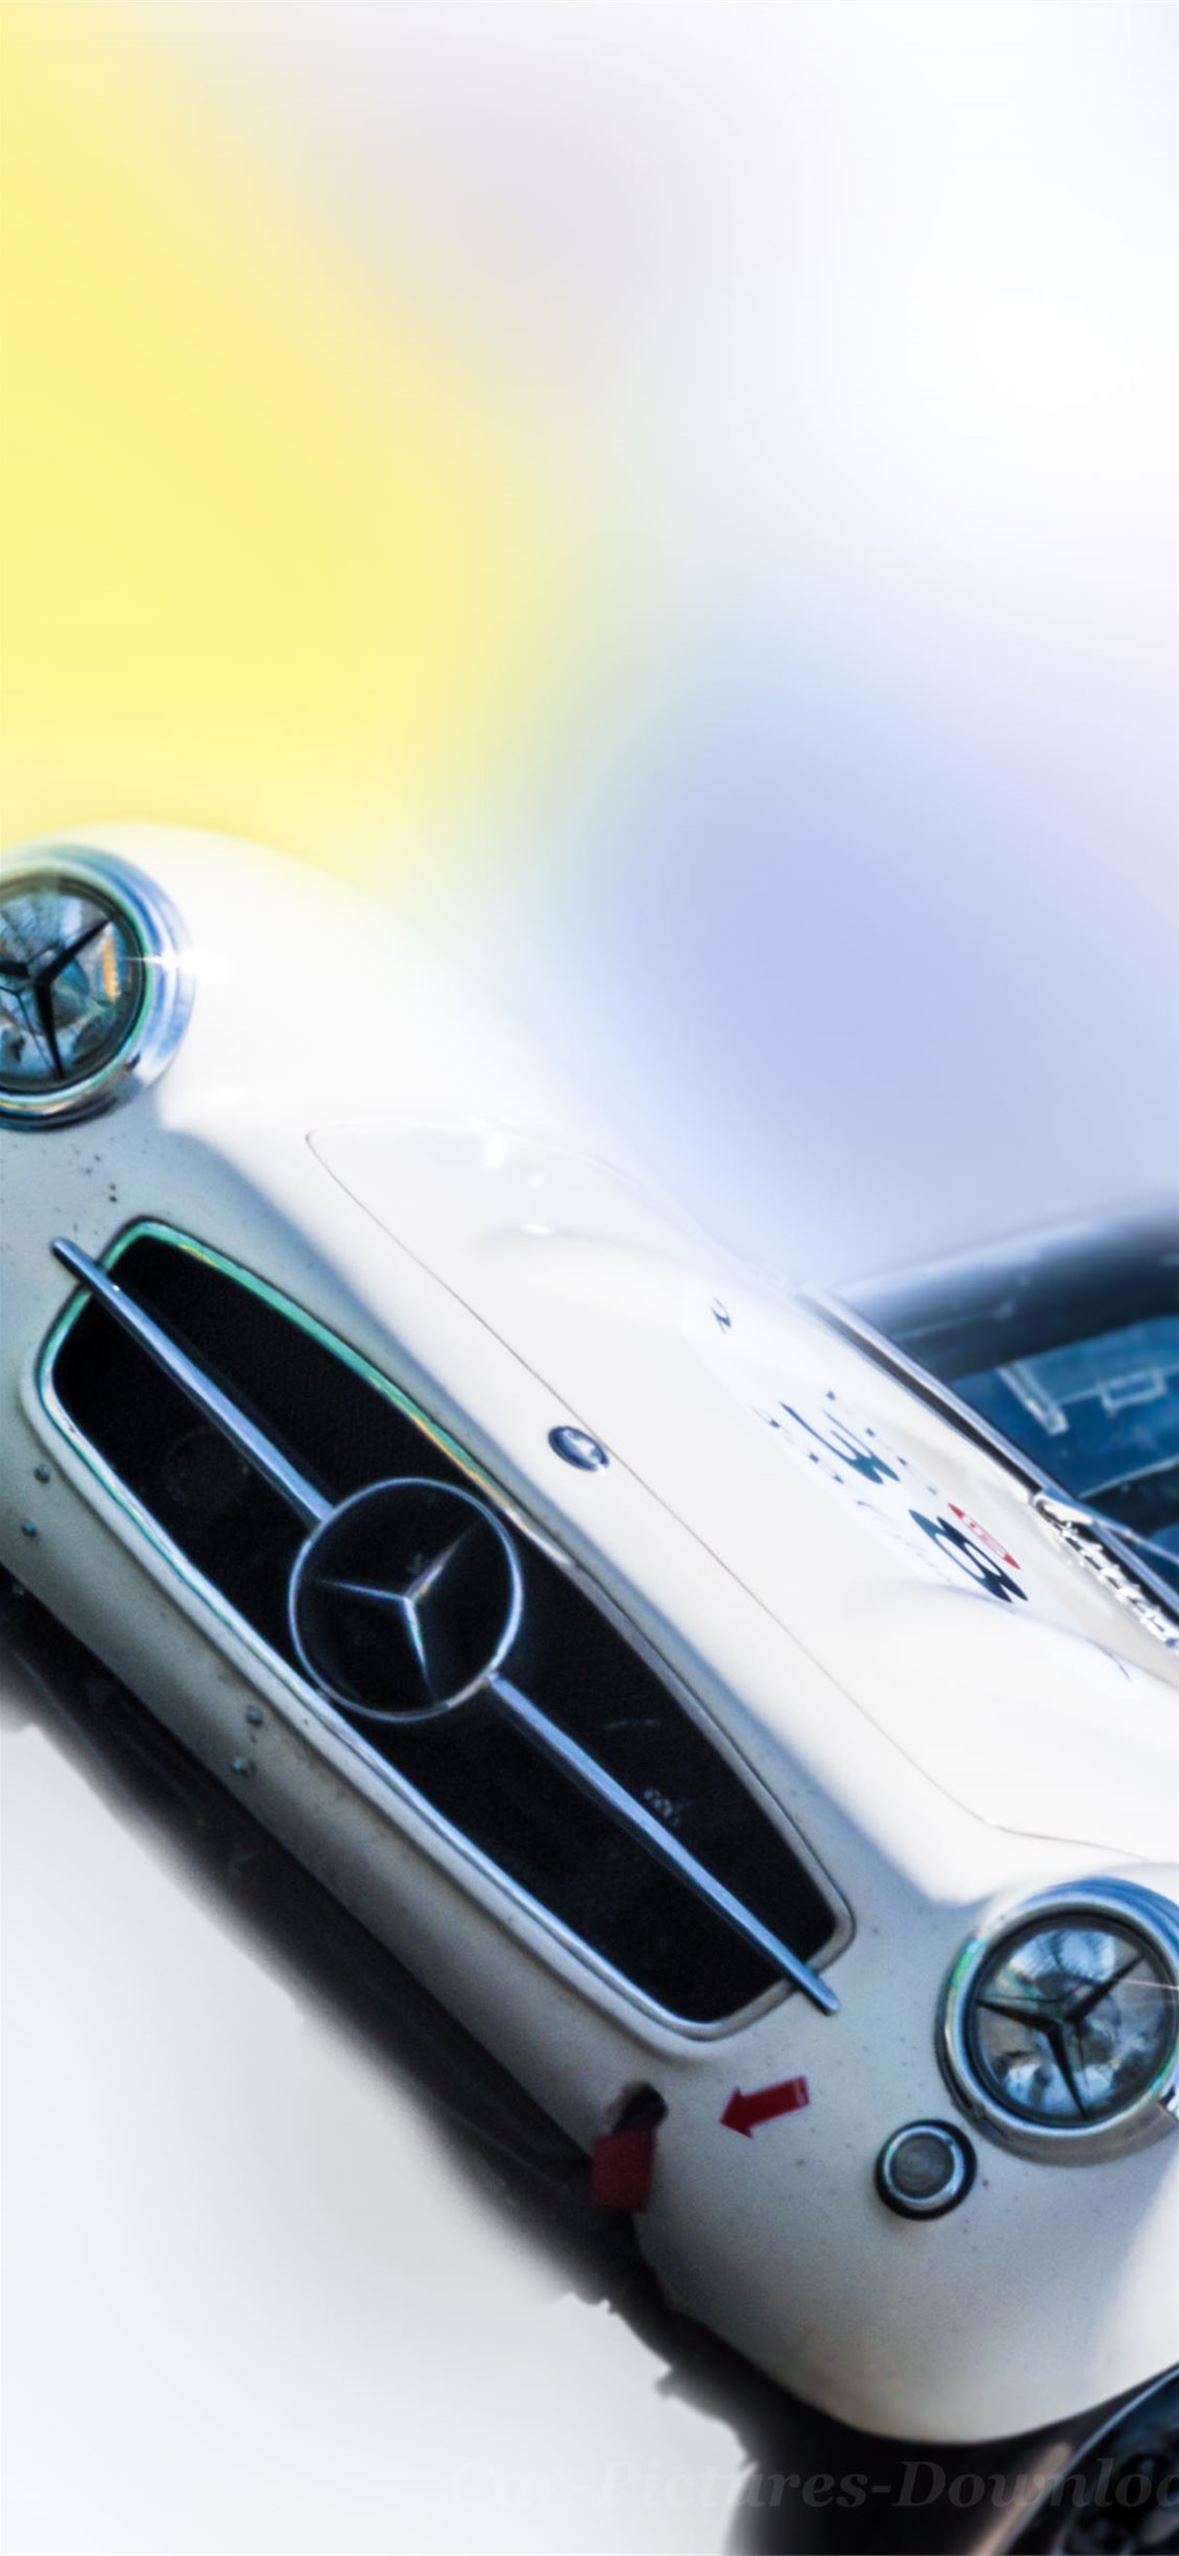 Mercedes Benz 300 Sl Classic Sports Car Hd Mercede... iPhone Wallpapers  Free Download